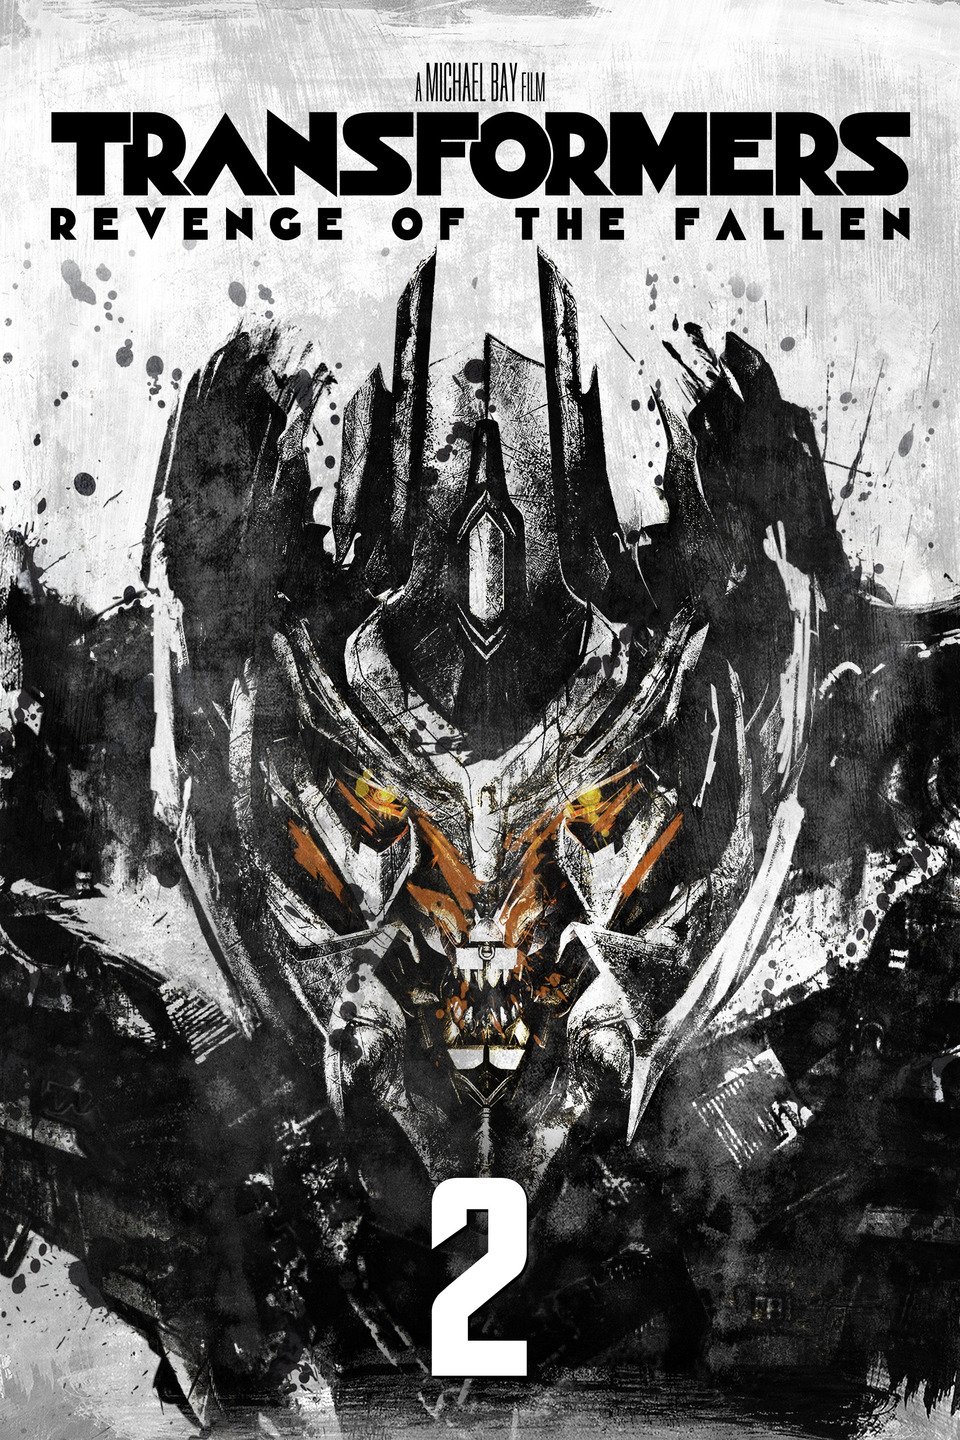 [MINI Super-HQ] Transformers: Revenge of the Fallen (2009) ทรานส์ฟอร์มเมอร์ส อภิมหาสงครามแค้น ภาค 2 [1080p] [พากย์ไทย 5.1 + อังกฤษ DTS] [BluRay.DTS.x264] [บรรยายไทย + อังกฤษ] [เสียงไทยมาสเตอร์ + ซับไทย] [ONE2UP]